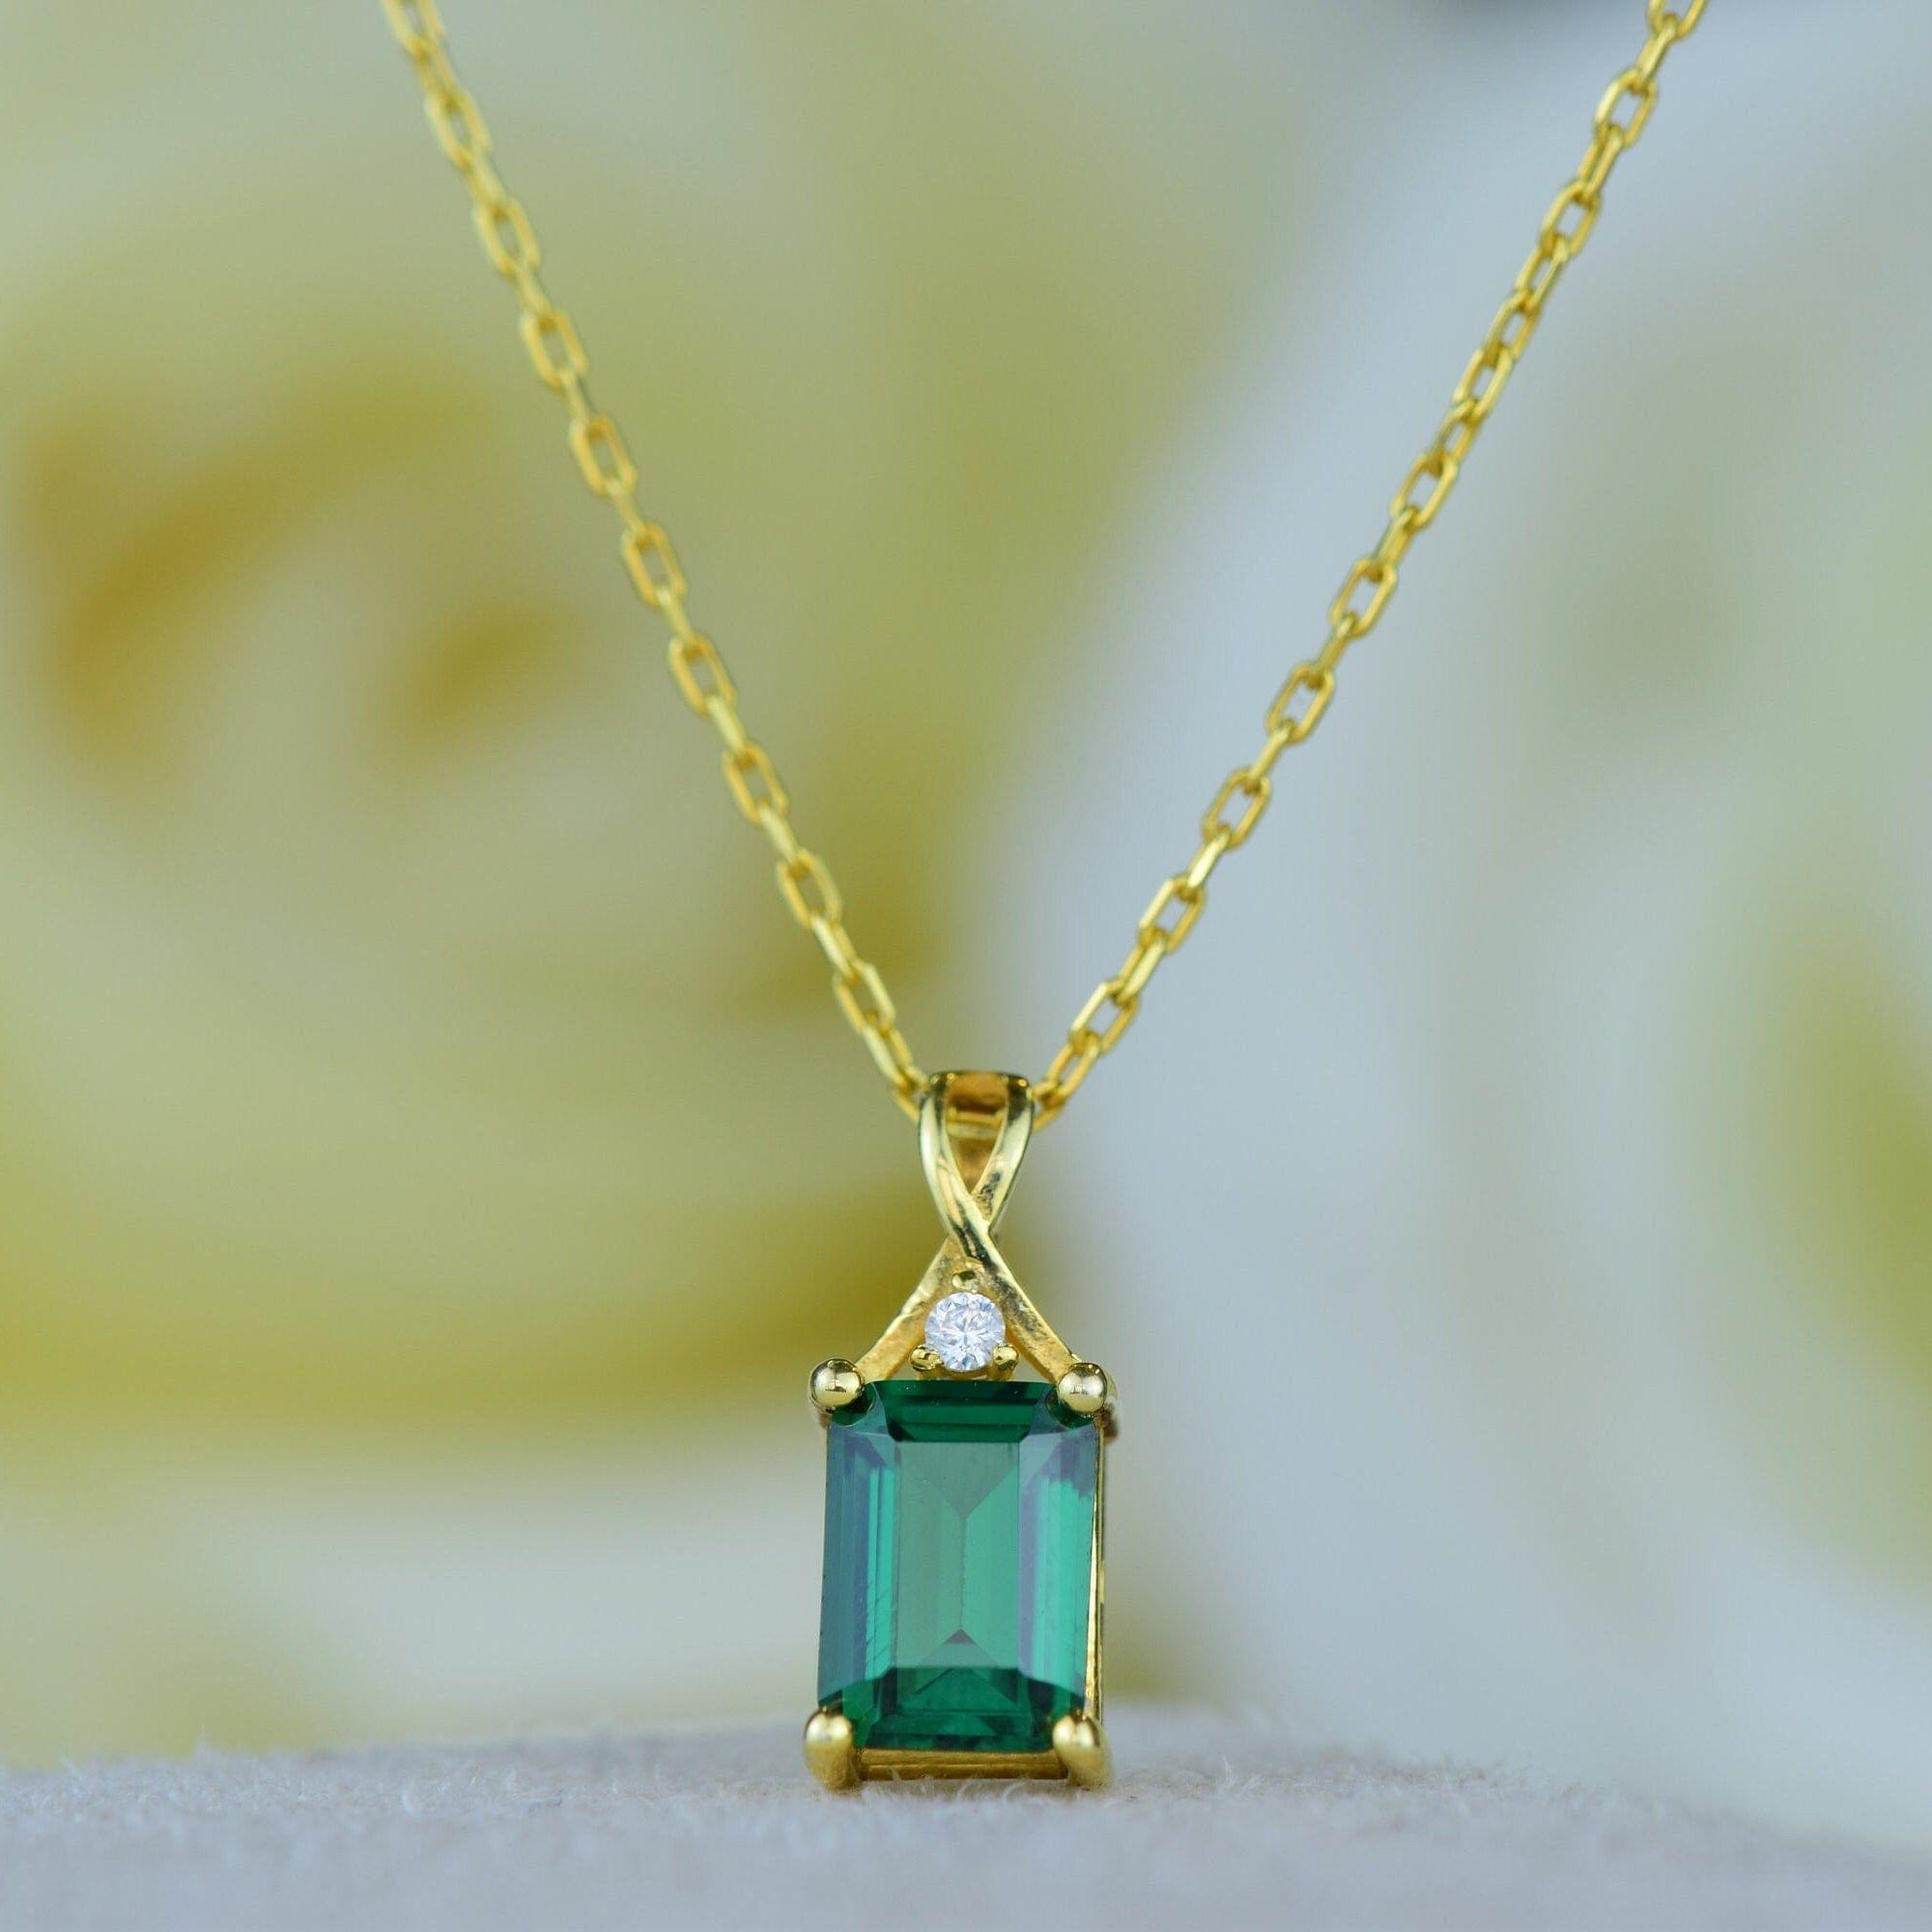 Buy Emerald pendant necklace, Tear drop natural emerald silver pendant  online at aStudio1980.com